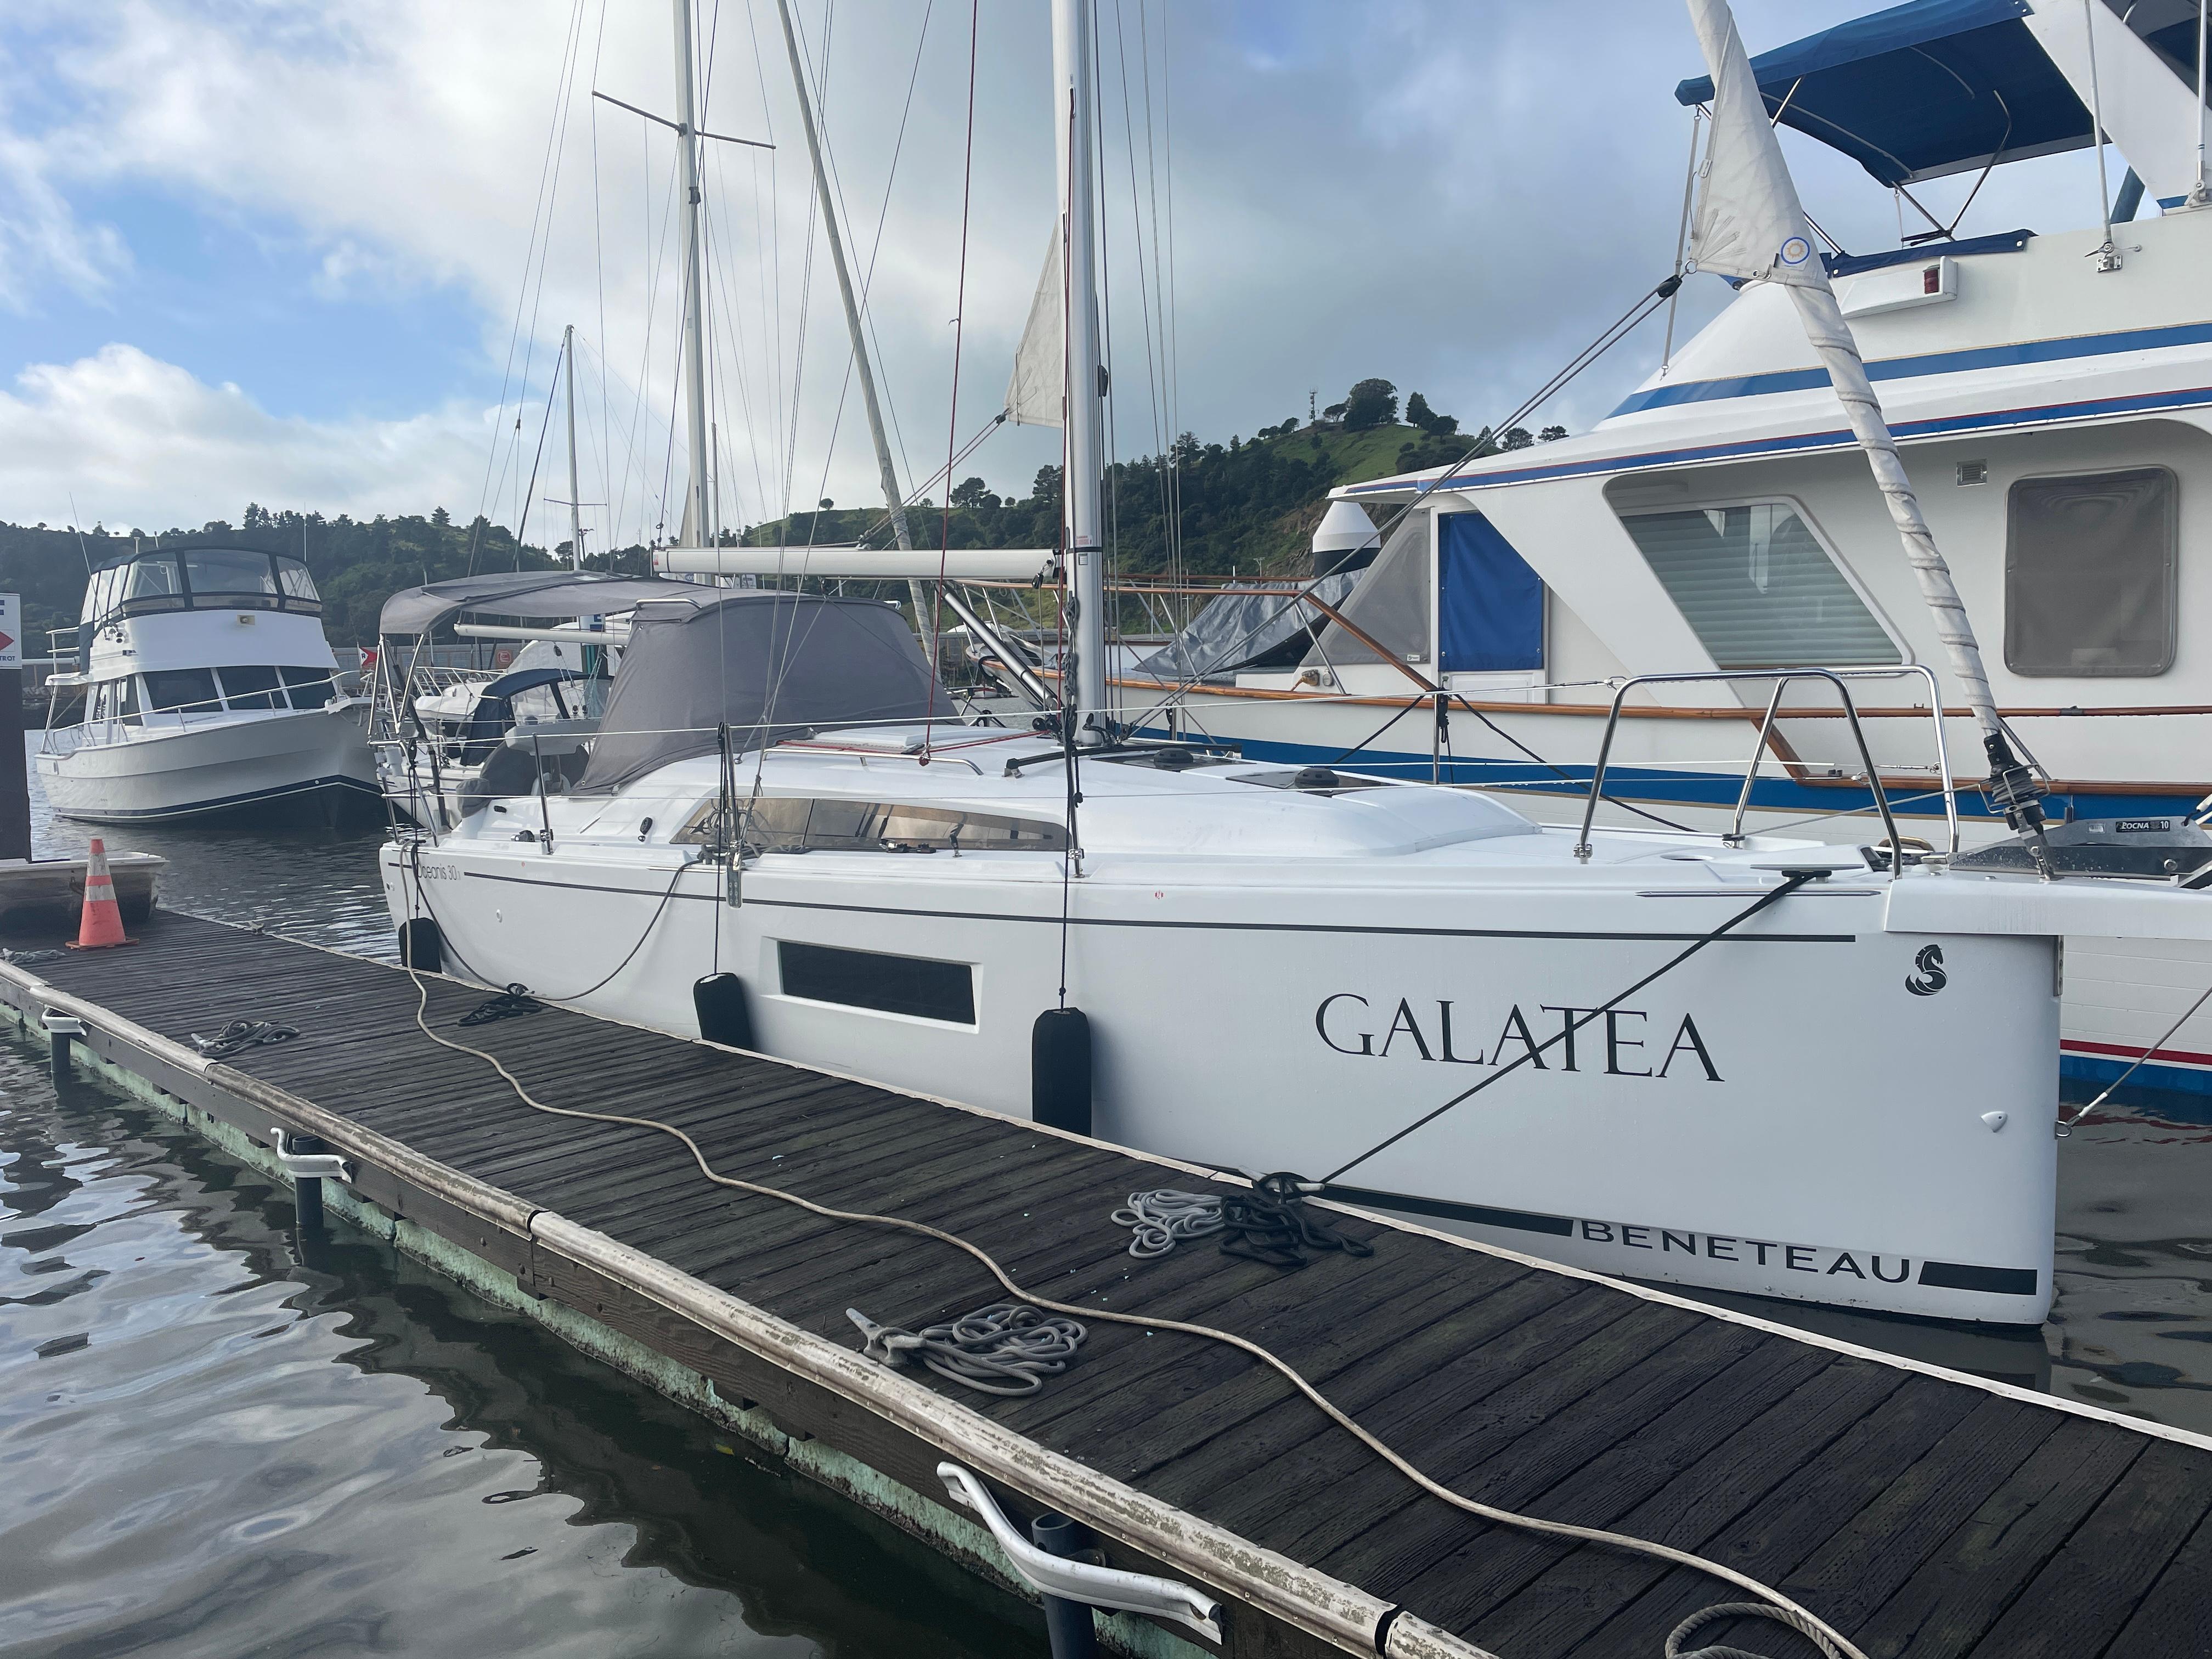 Galatea Yacht Photos Pics 